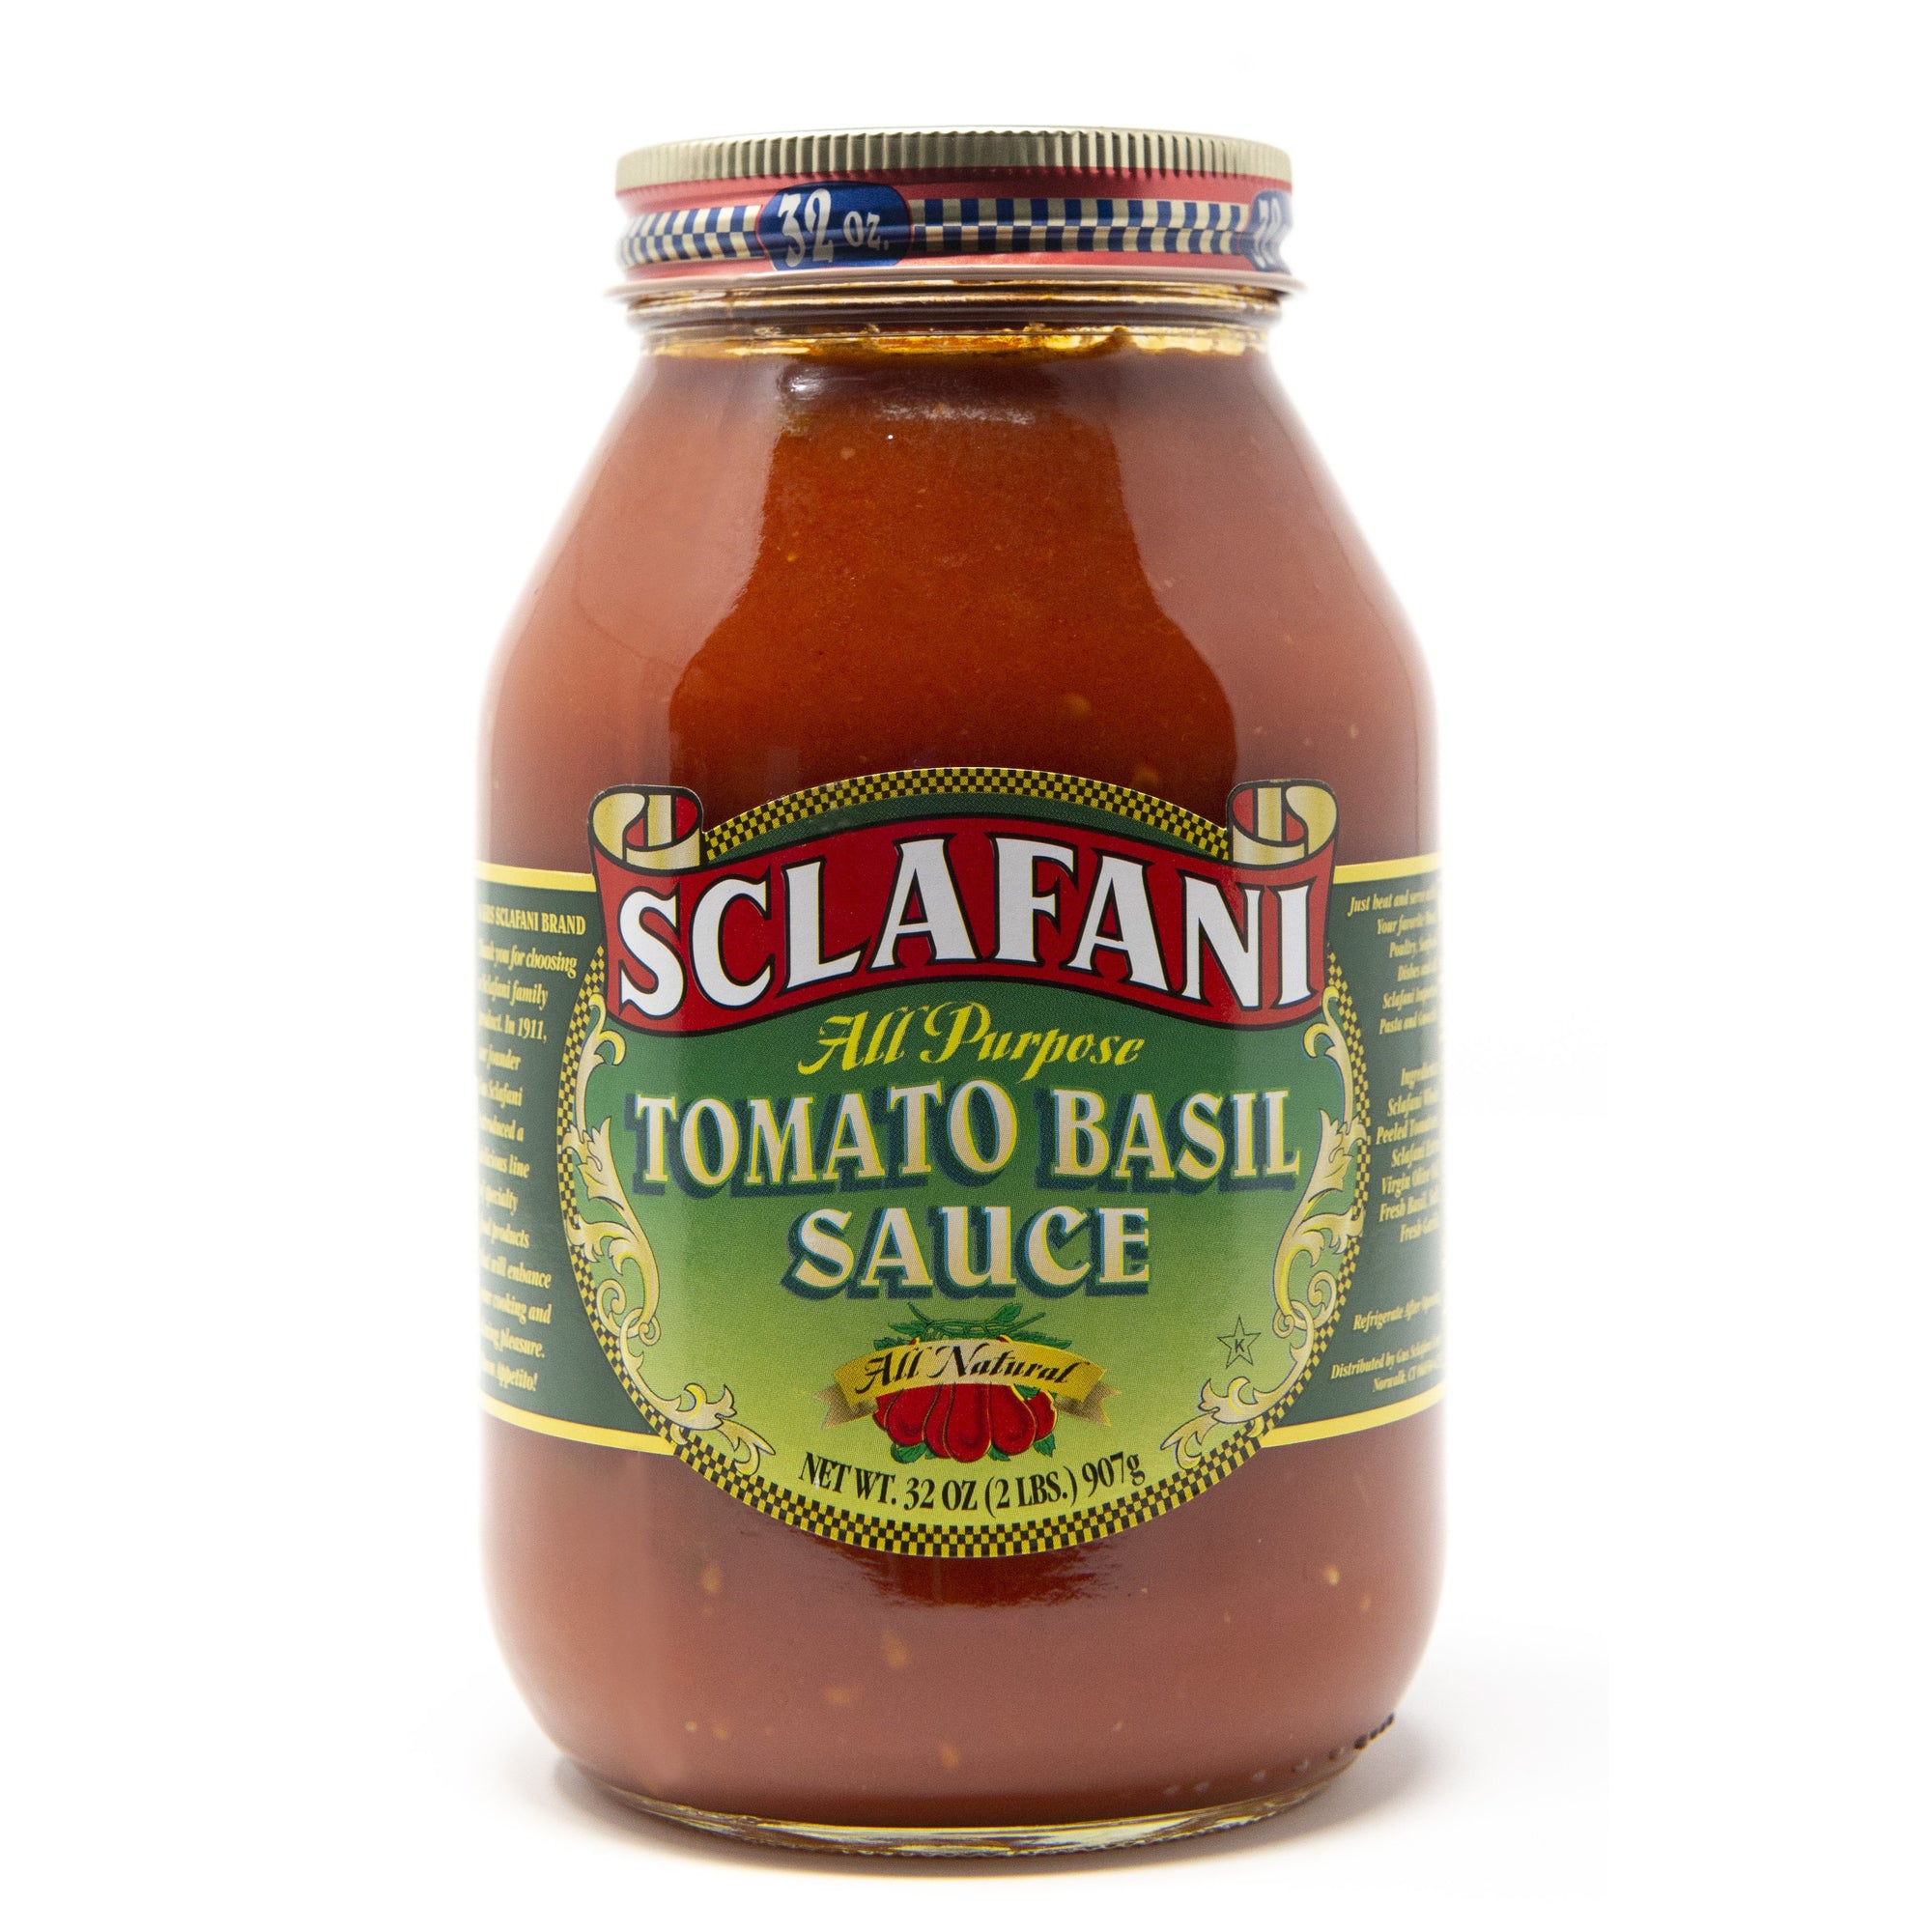 Sclafani Tomato Basil Sauce 32 oz.